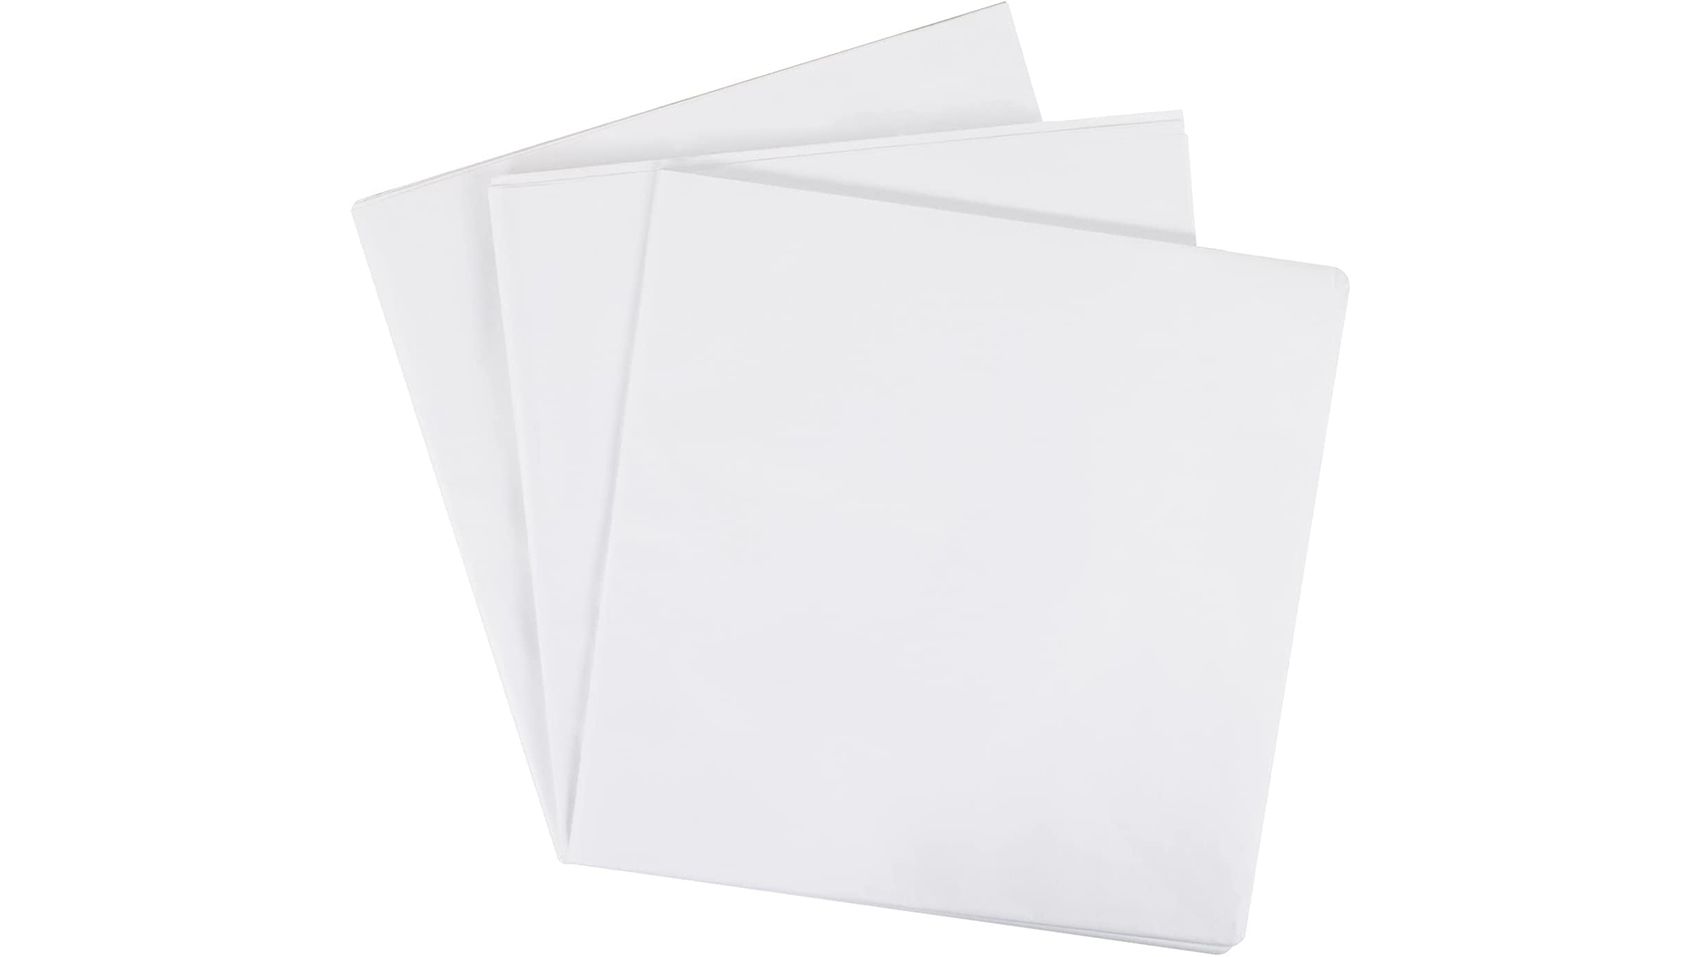  Simetufy 60 Sheets Tissue Paper for Gift Bags, 10